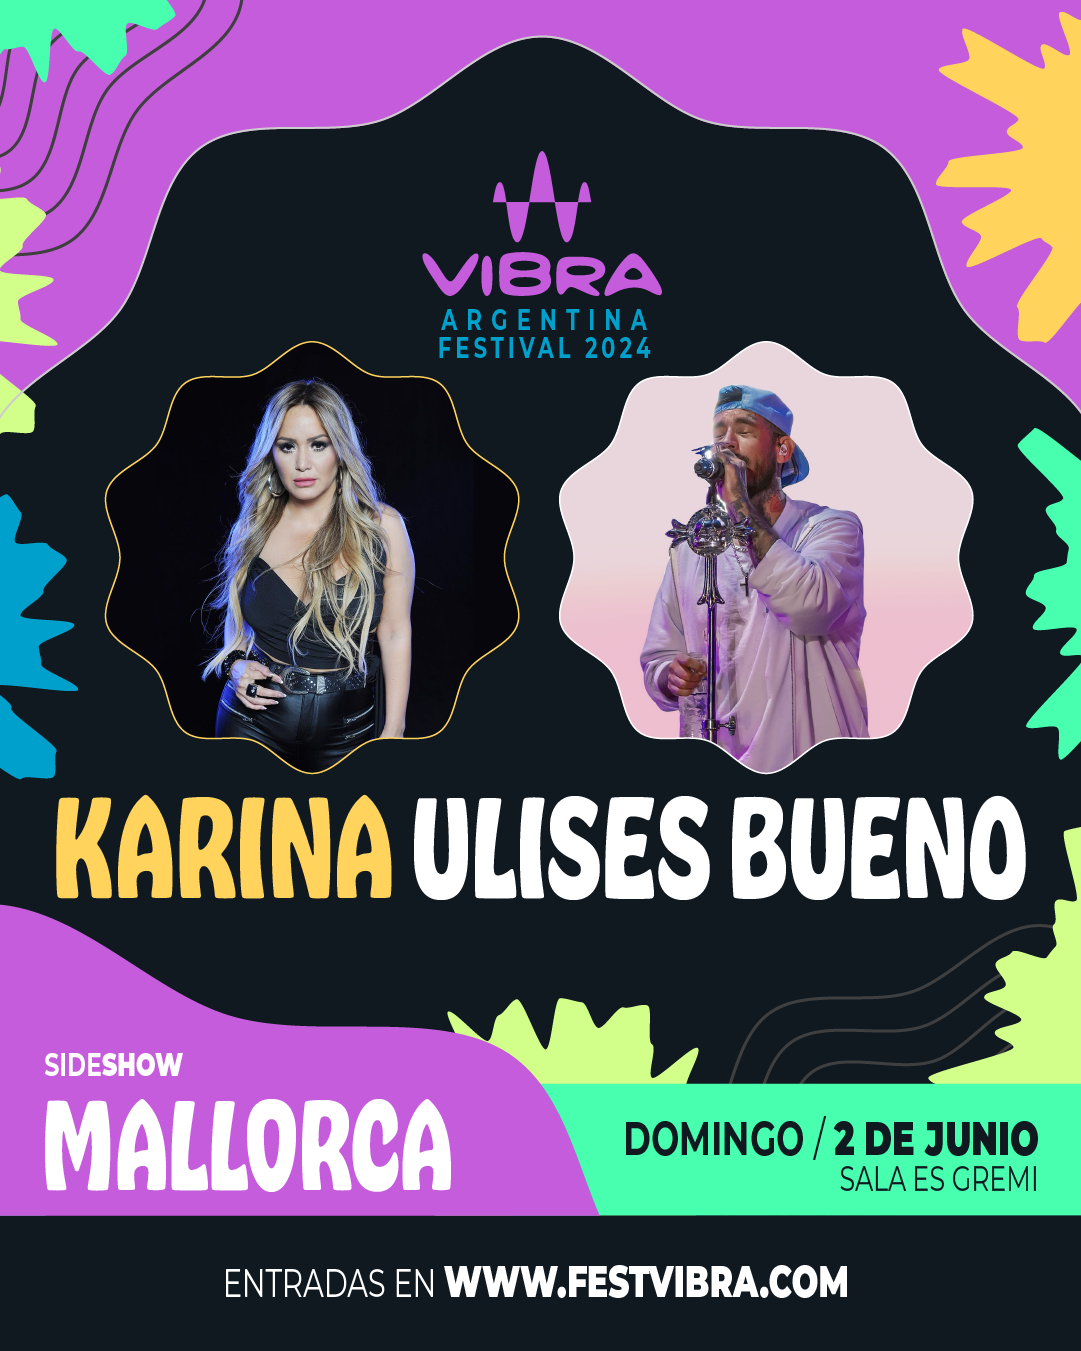 VIBRA ARGENTINA FESTIVAL 2024 en MALLORCA, sala es Gremi, Domingo 2 Junio Karina y Ulises Buenmo. Entradas y Info: www.festvibra.com